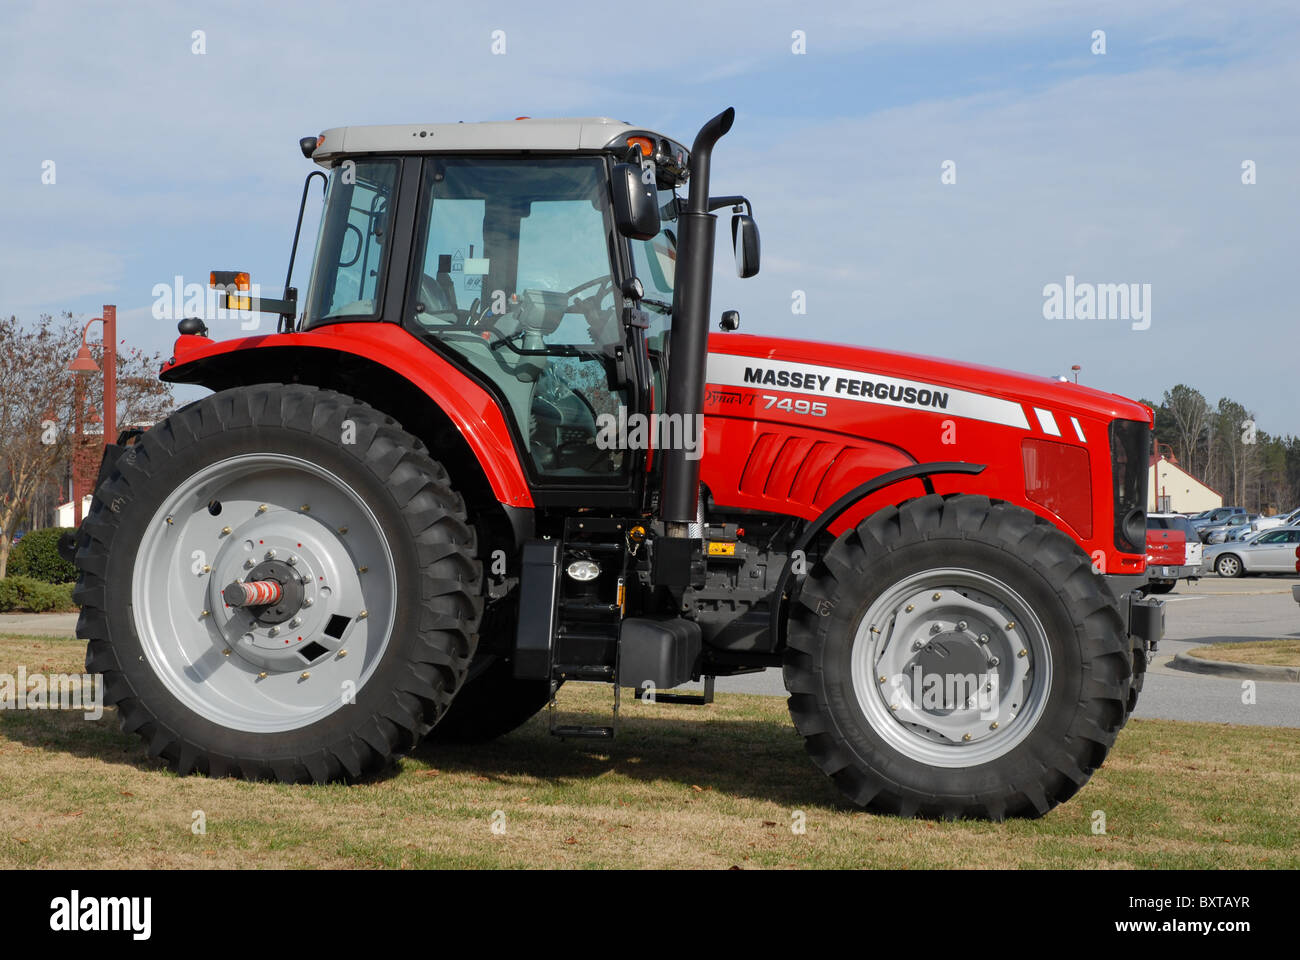 Massey Ferguson Farm Tractor Stock Photo